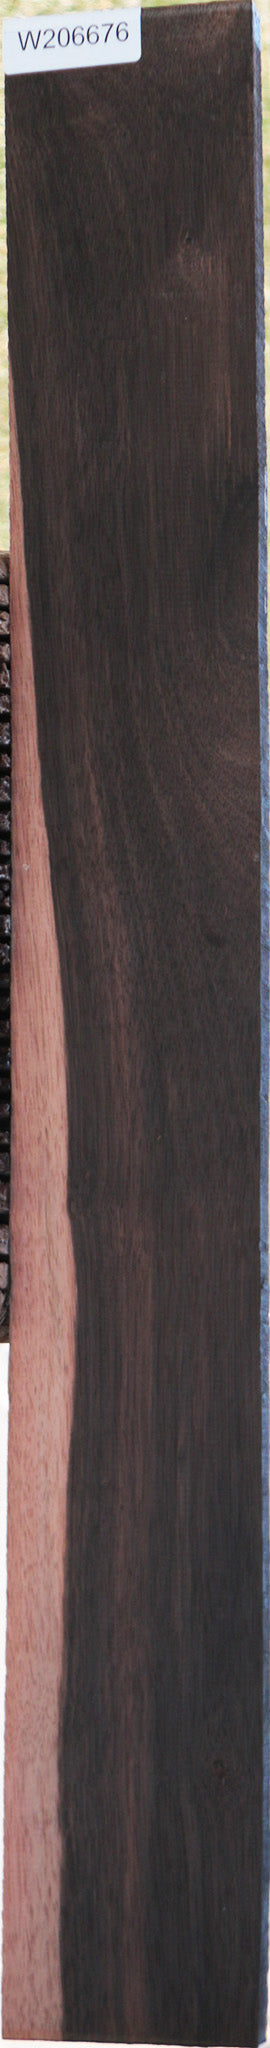 Amara Ebony Lumber